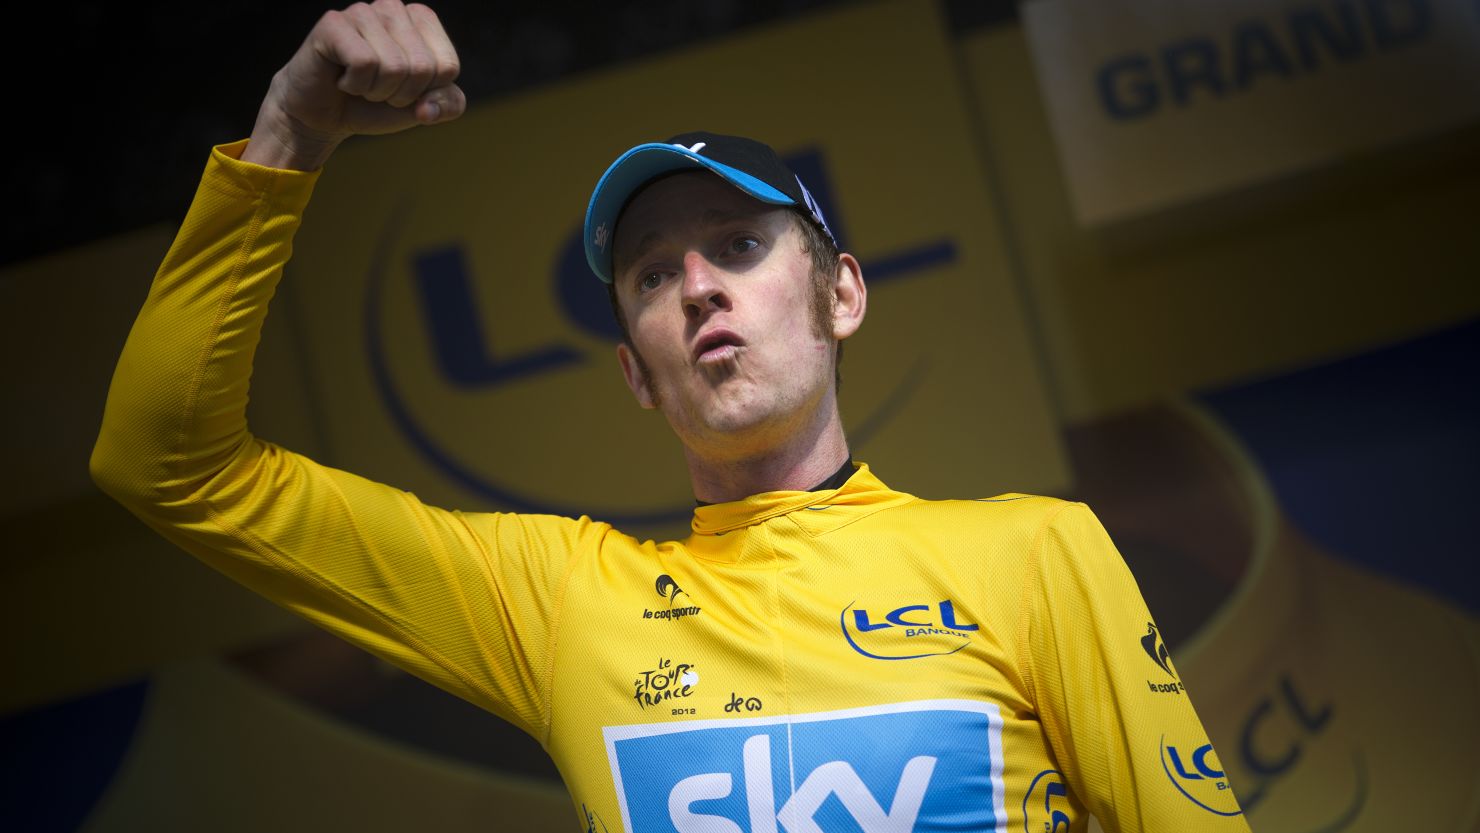 Bradley Wiggins celebrates after a dominant performance saw him take control of the Tour de France